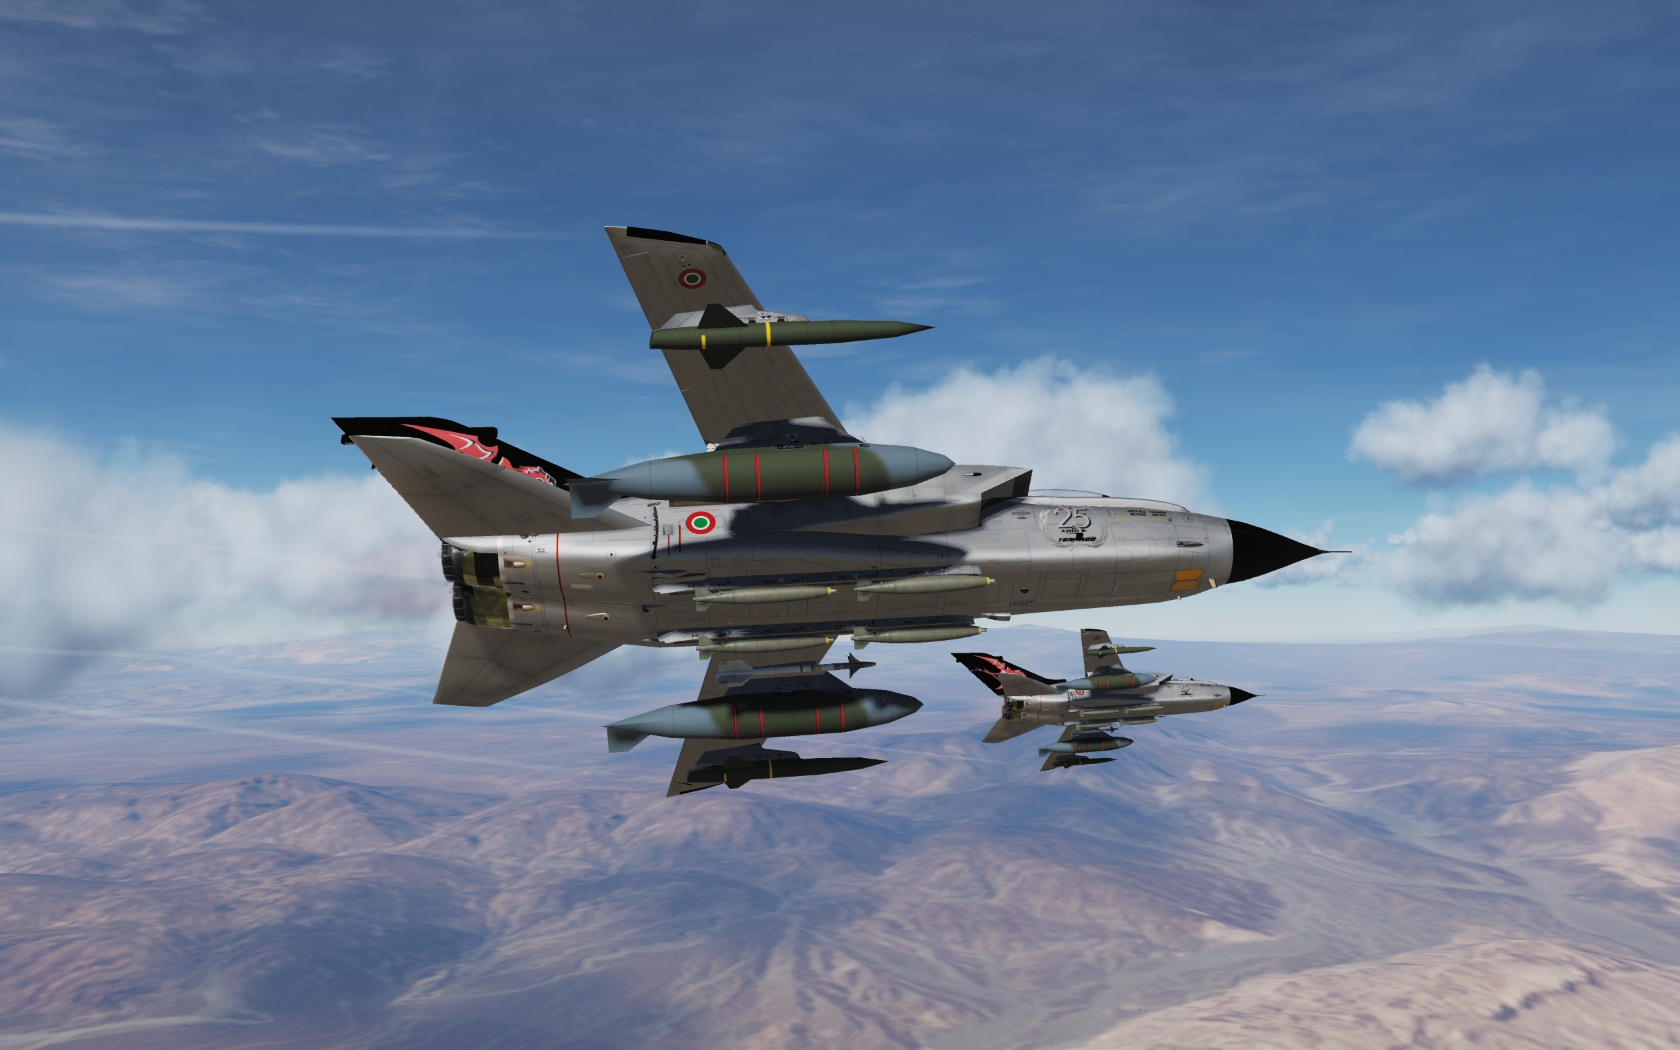 DCS WORLD 米格21比斯 + 米格29 + Tornado + A-10  混战游戏截图-9940 